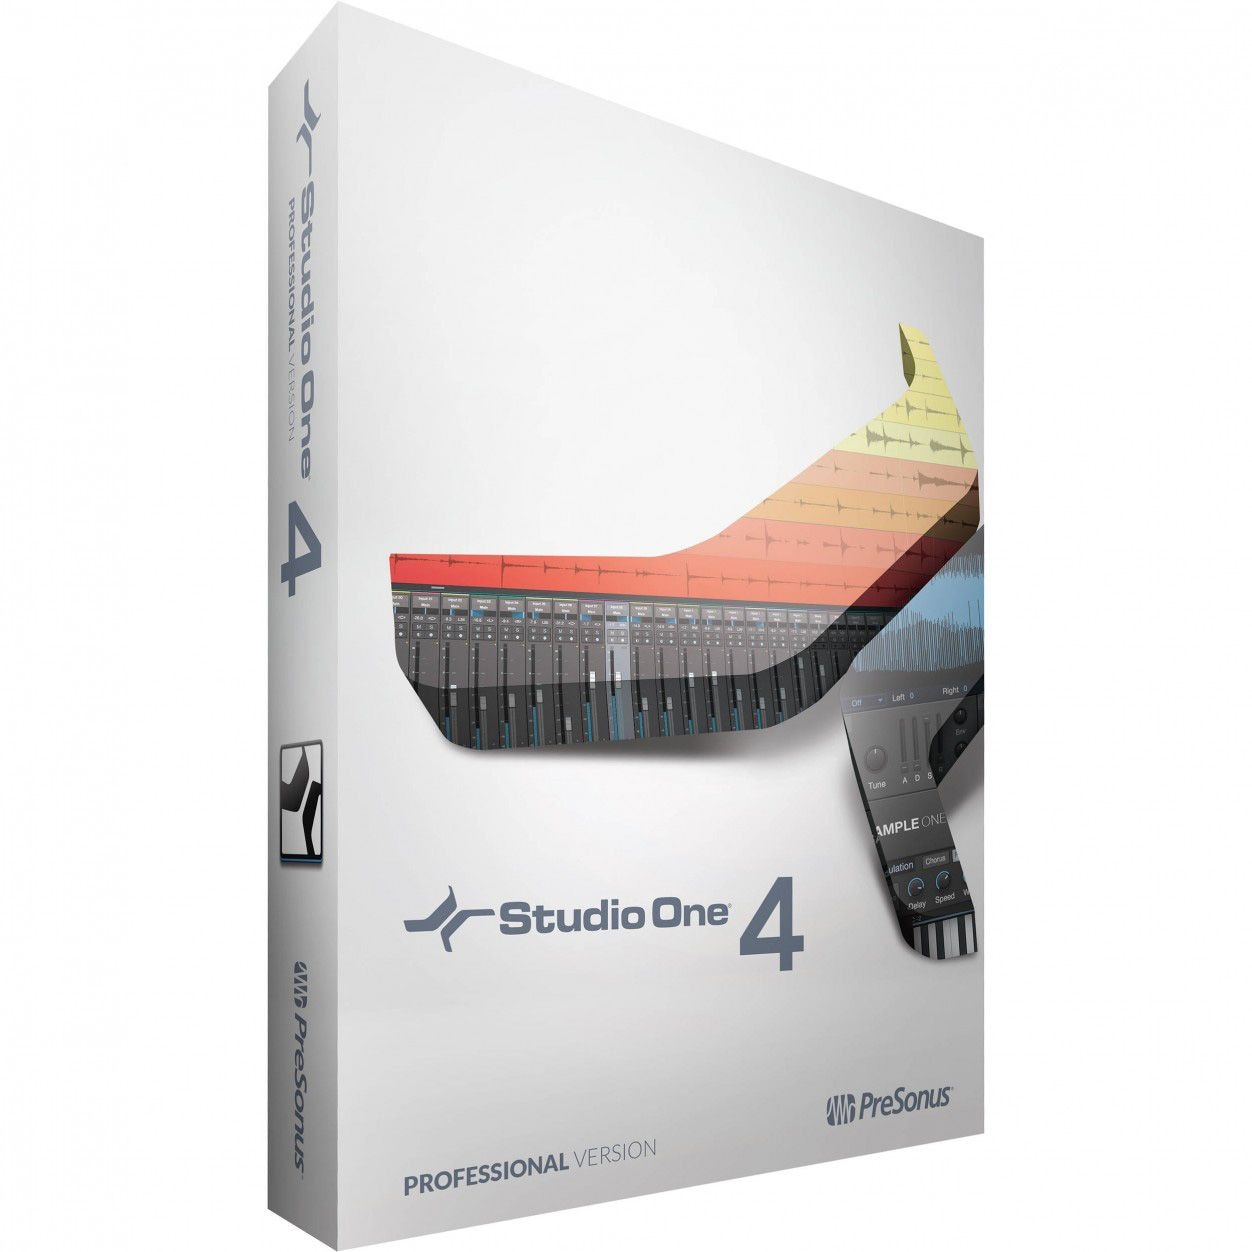 PreSonus S1 PROFESSIONAL 4.0 экземпляр программного обеспечения, Studio One PRO 4